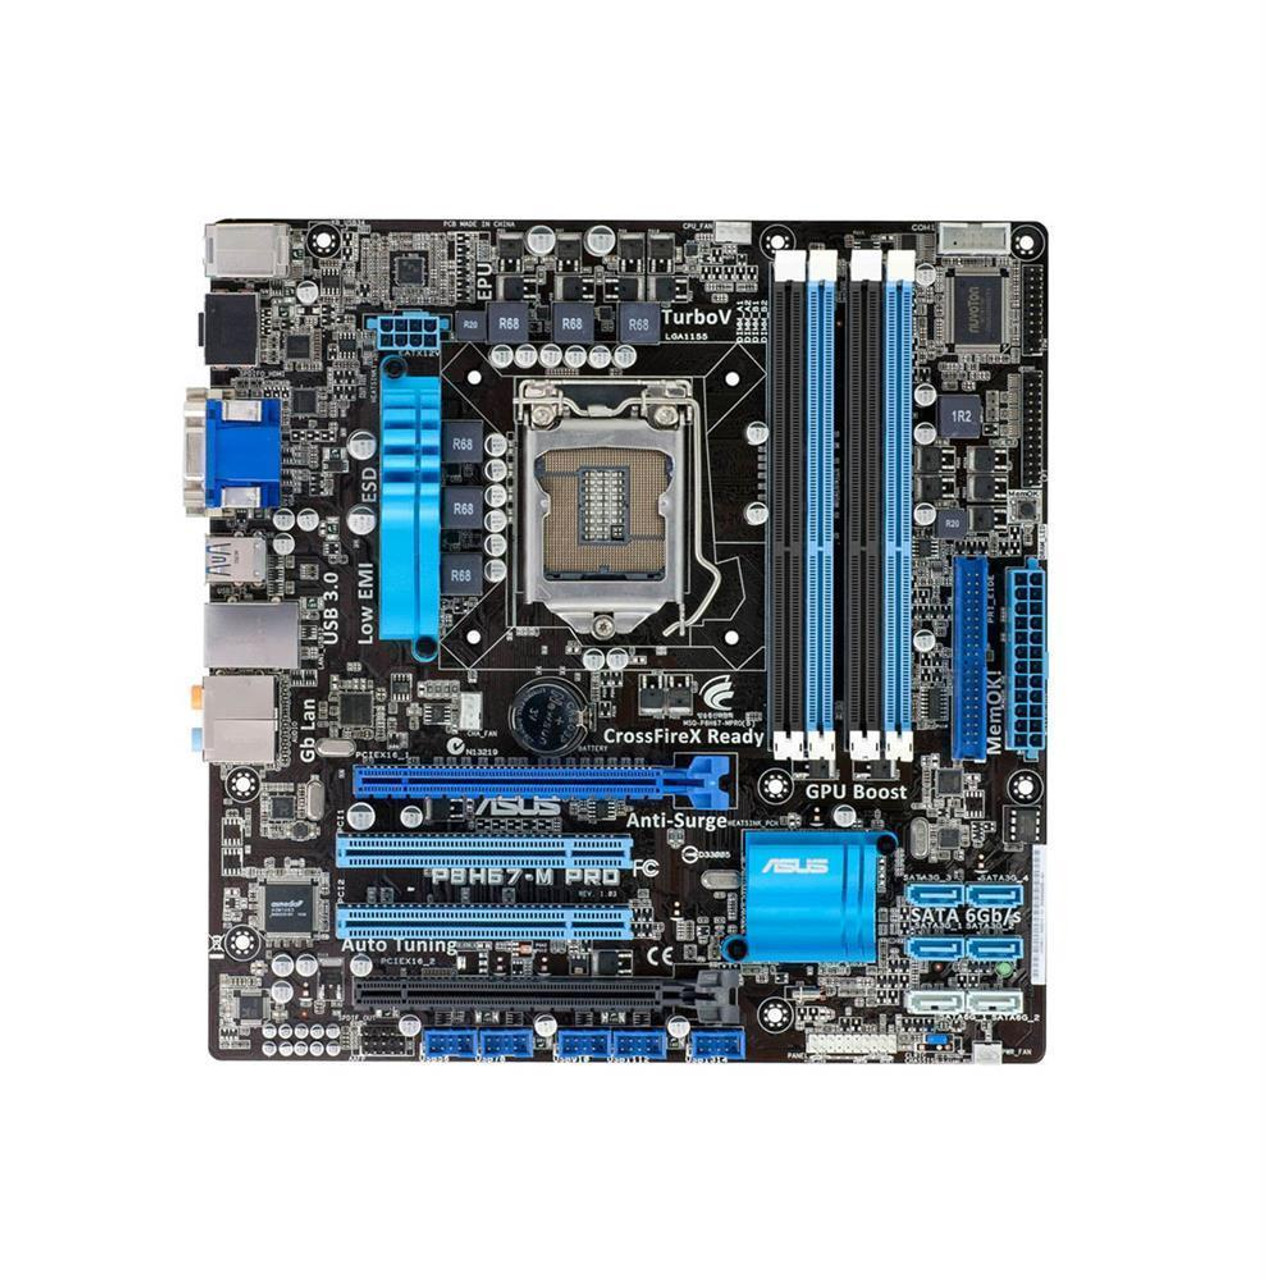 90-MIBEBA-G0EAY0DZ ASUS P8H67-M Intel H67 Socket 1155 DDR3 2x PCIe 2.0 x16 ATX Motherboard (Refurbished)